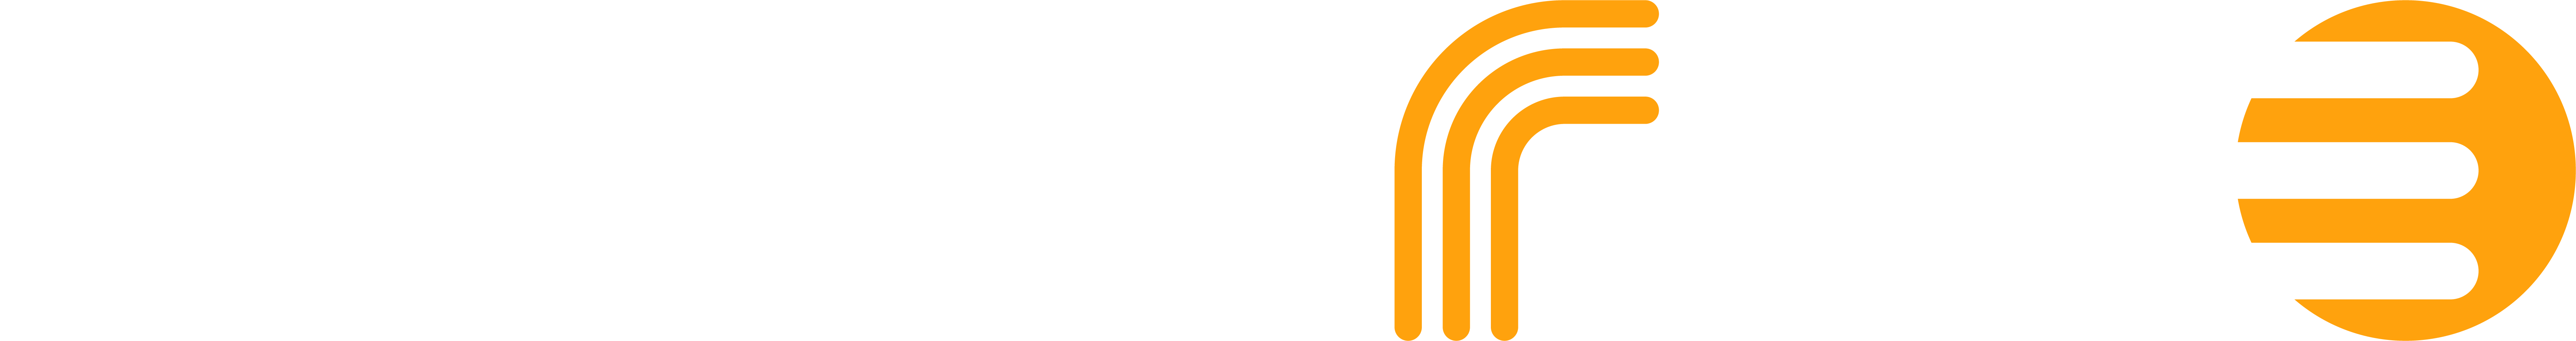 Calart logo